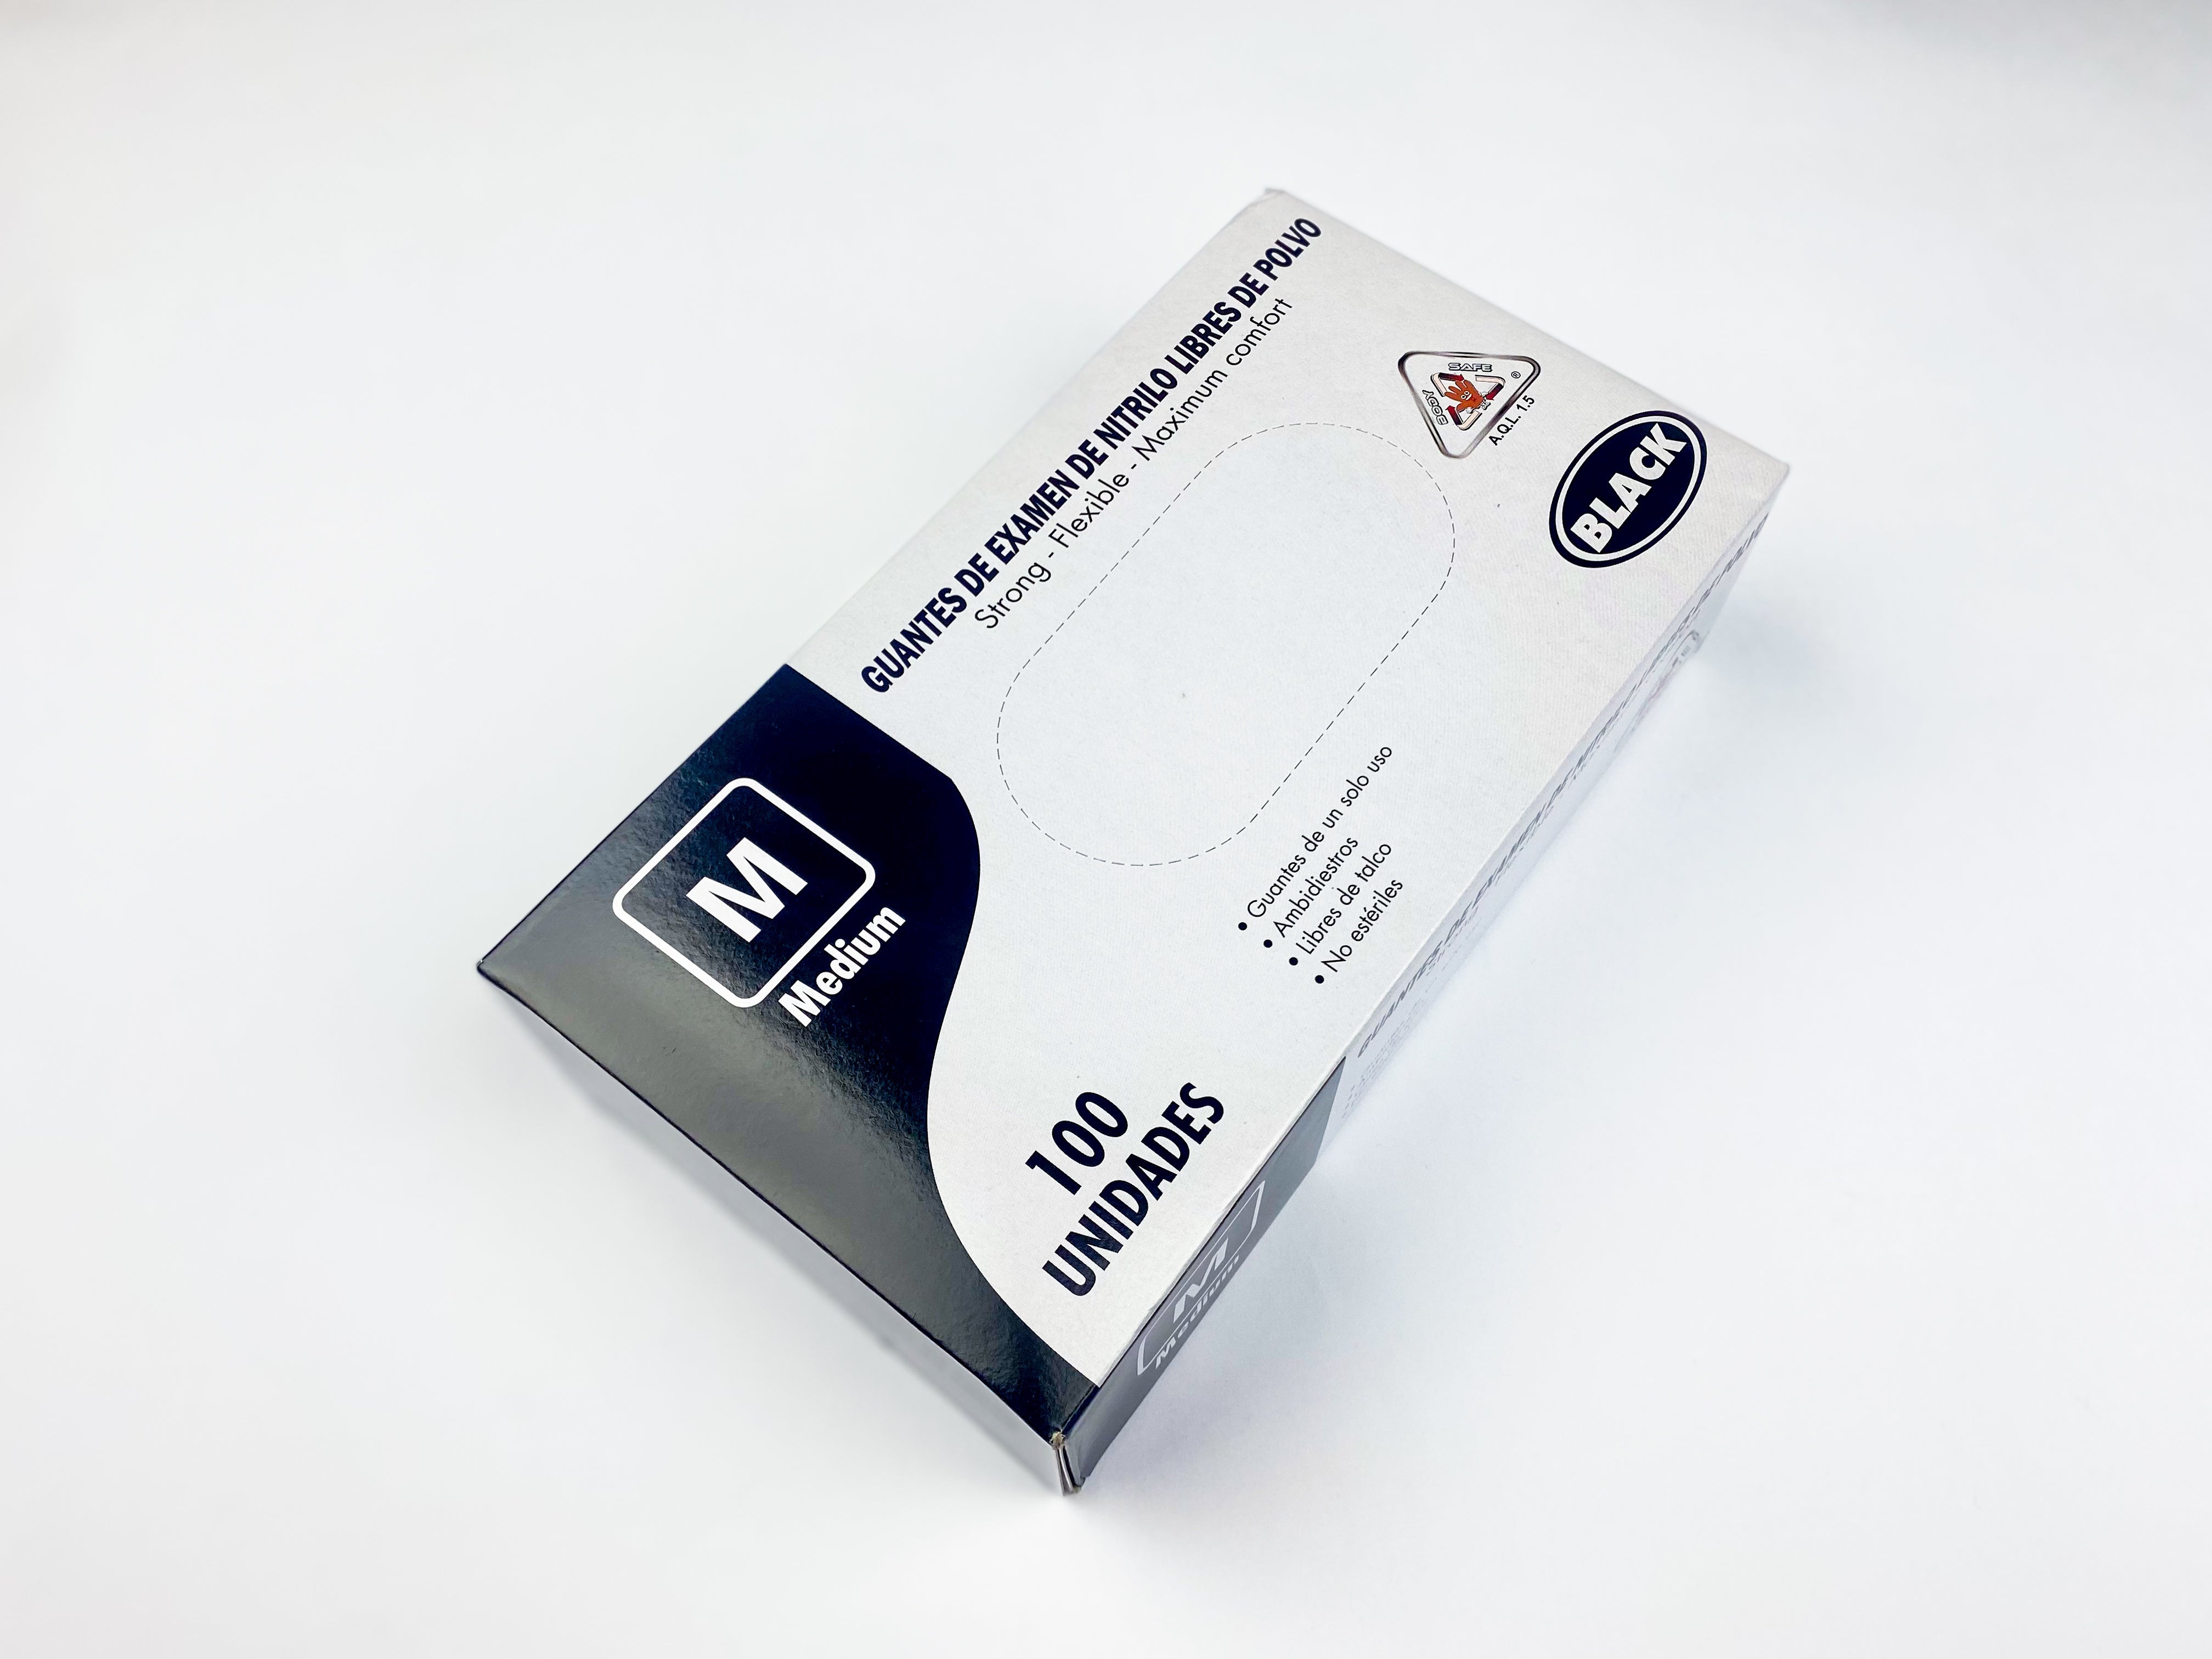 Guantes de nitrilo negro - Caja x 100 unidades - Pedido 10 cajas - Jelt